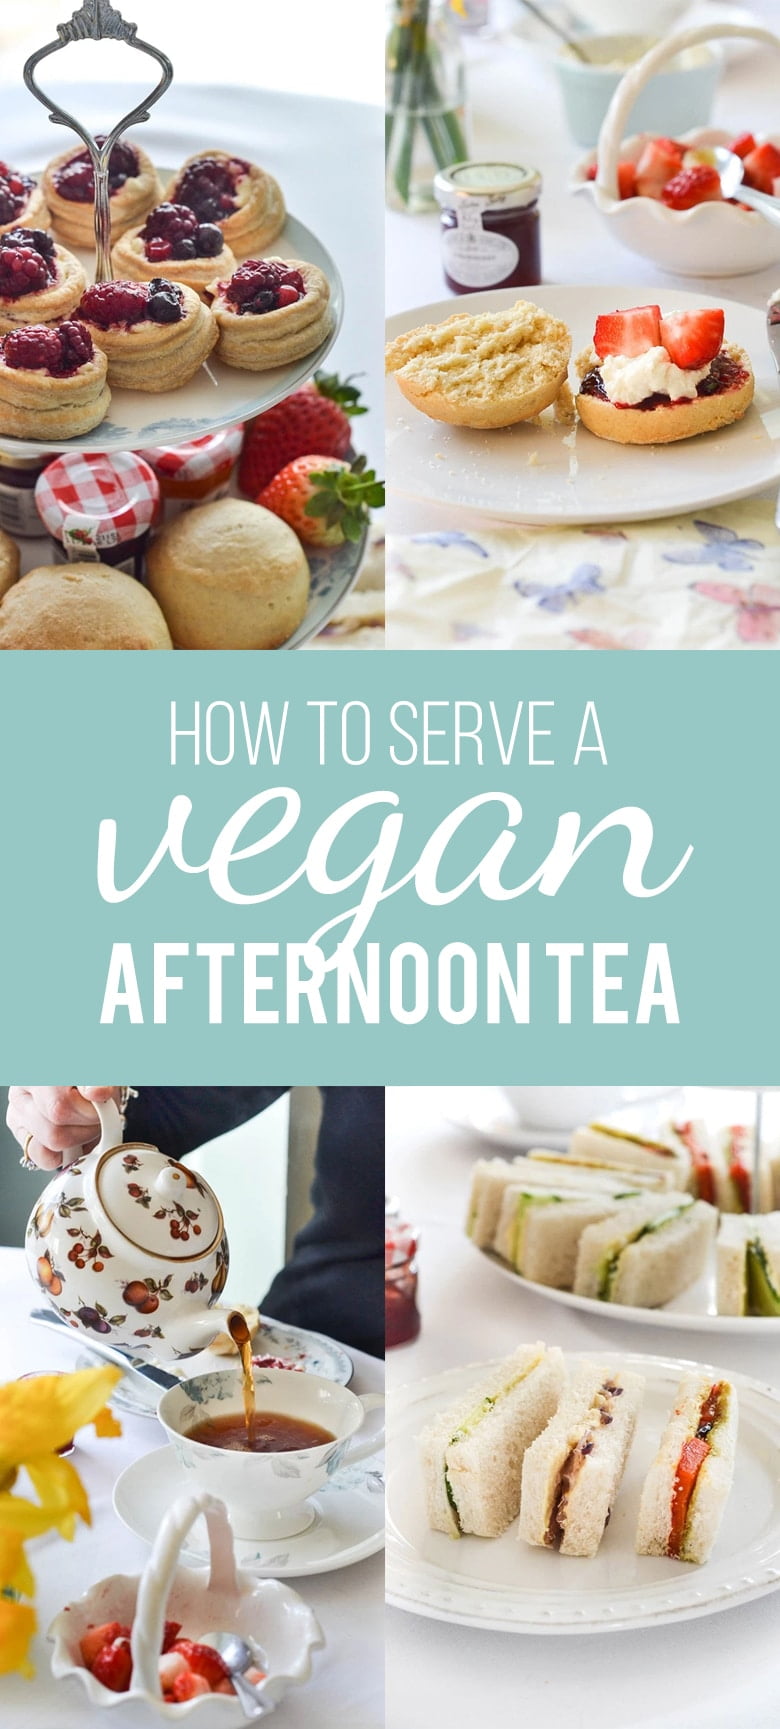 How To Serve A Vegan Afternoon Tea